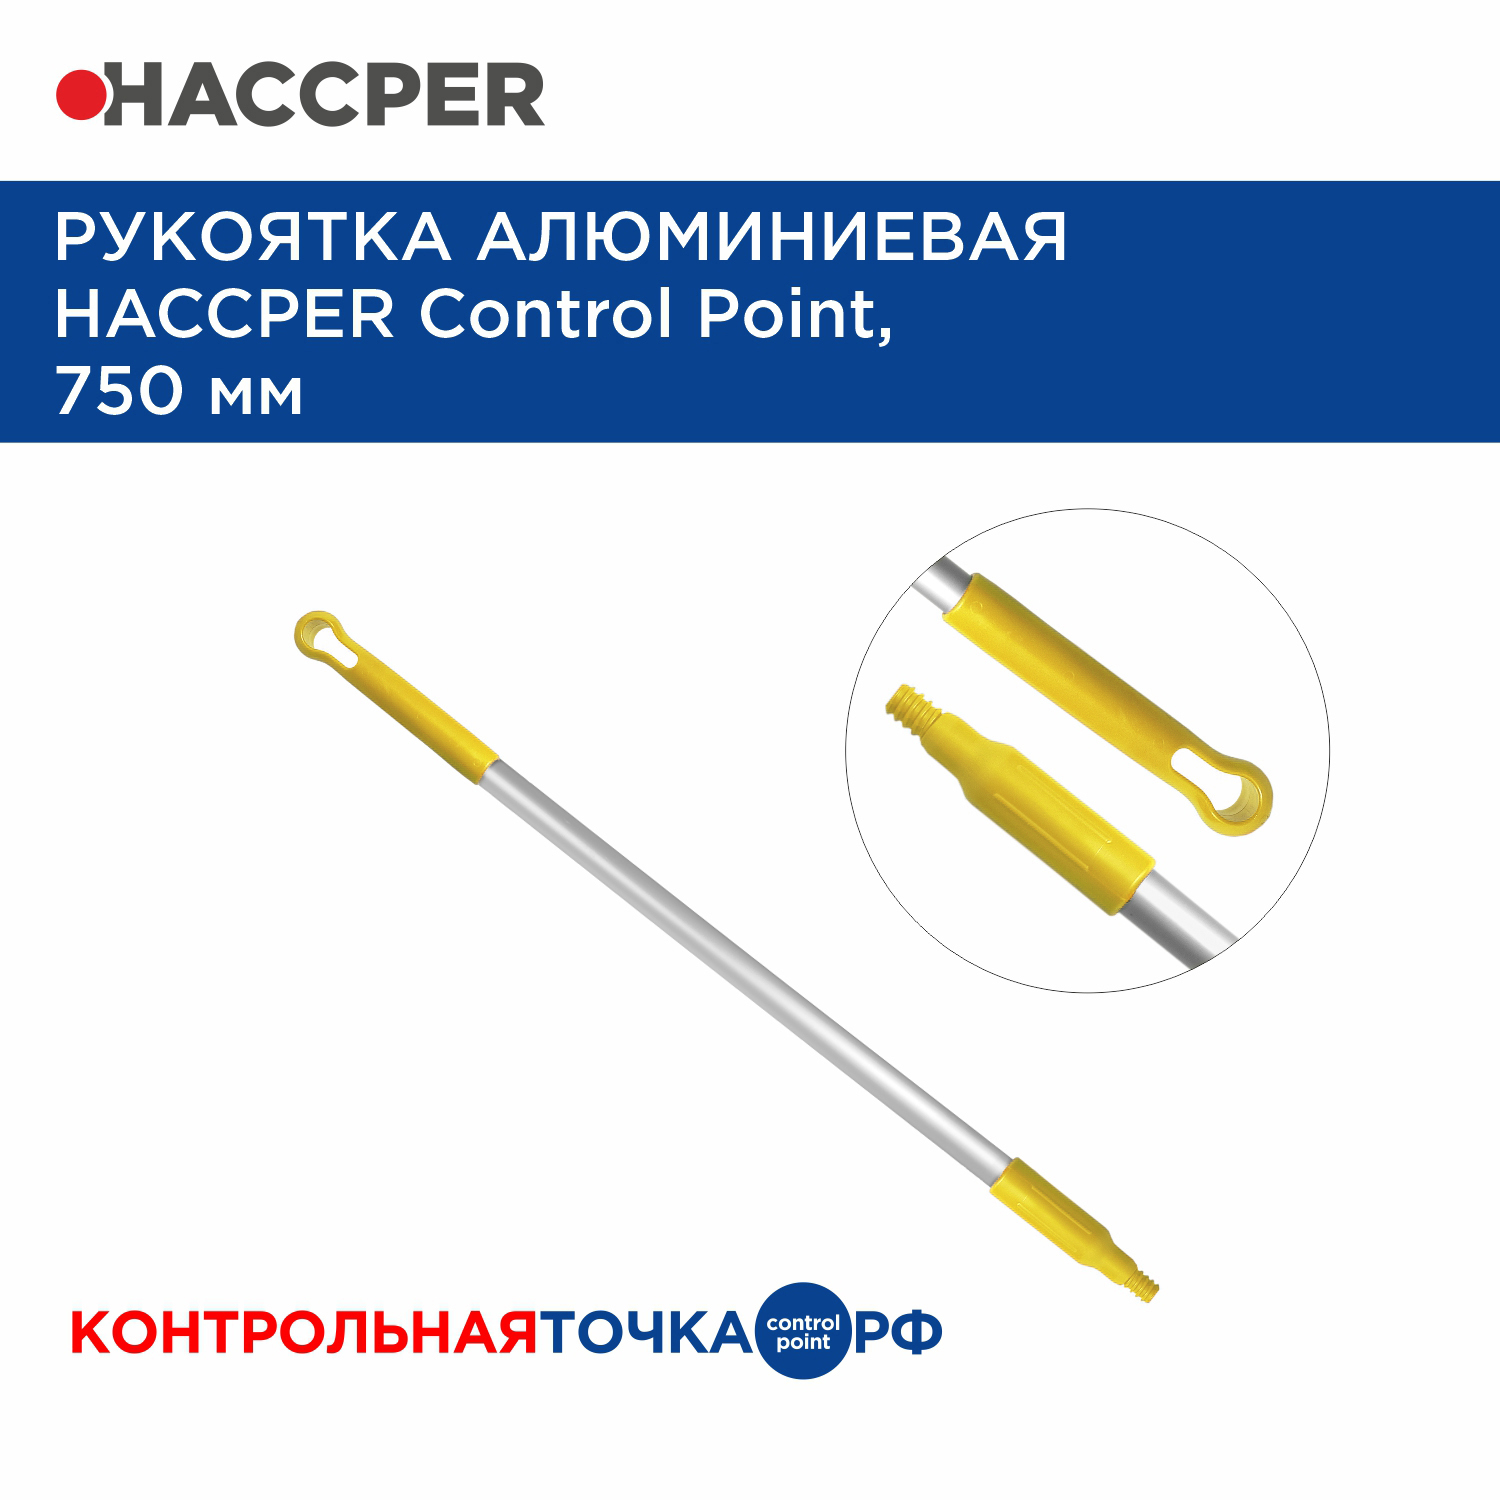 Рукоятка HACCPER Control Point алюминиевая, 750 мм, желтый